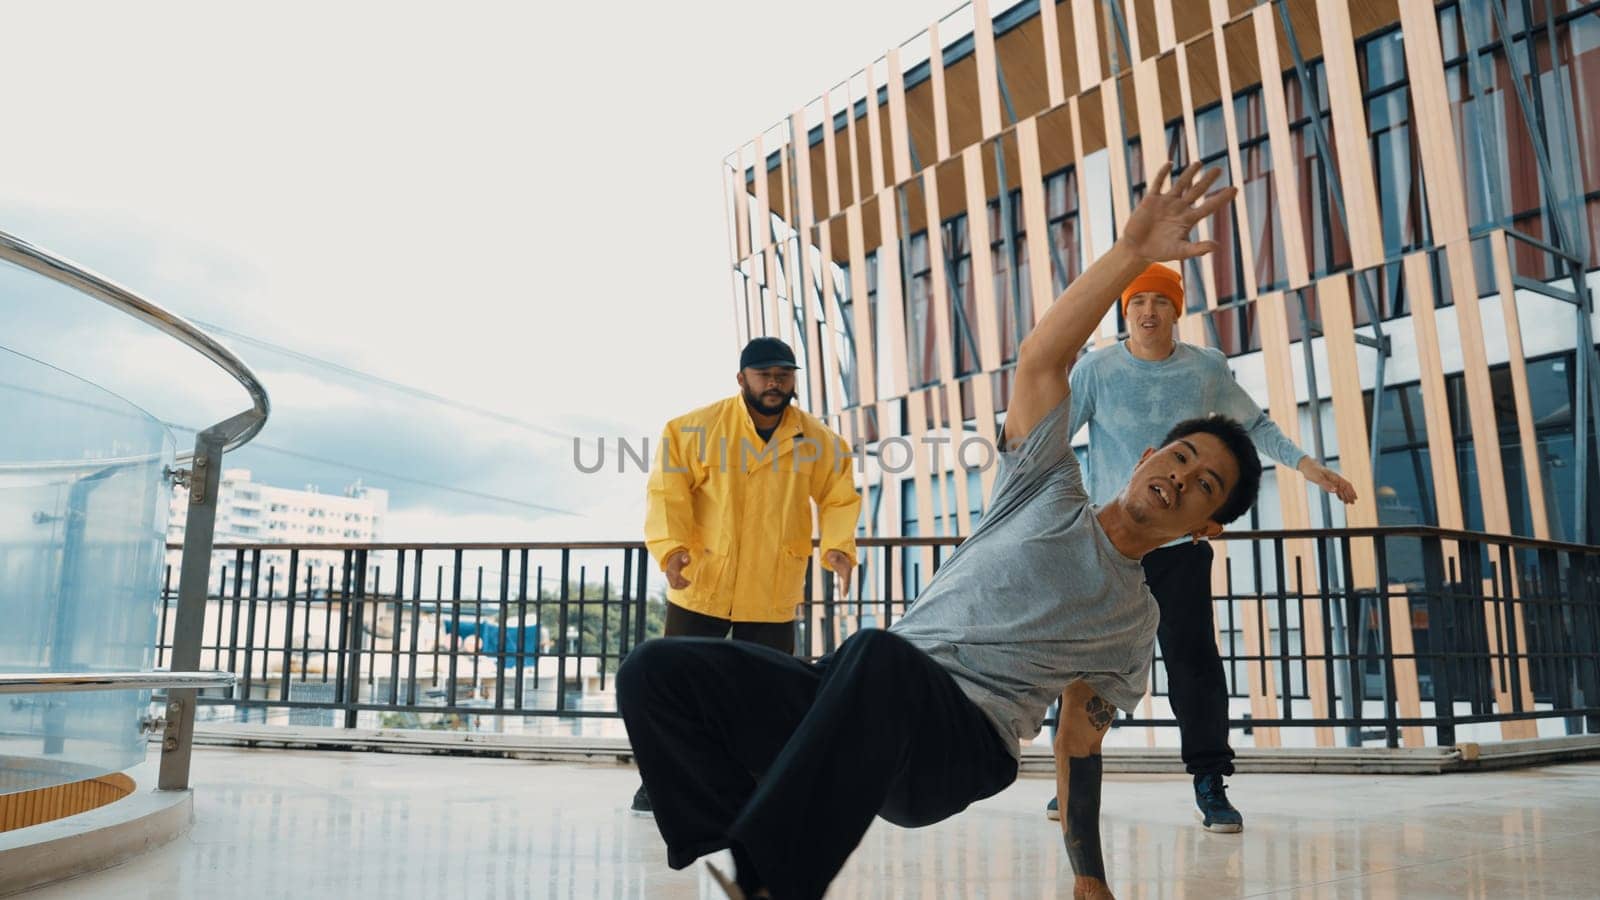 Hip hop team dance break dance while multicultural friend surround Endeavor. by biancoblue